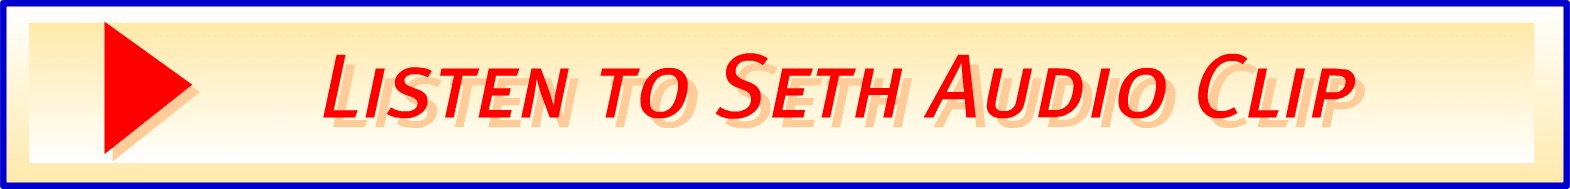 Listen to Seth Audio Clip